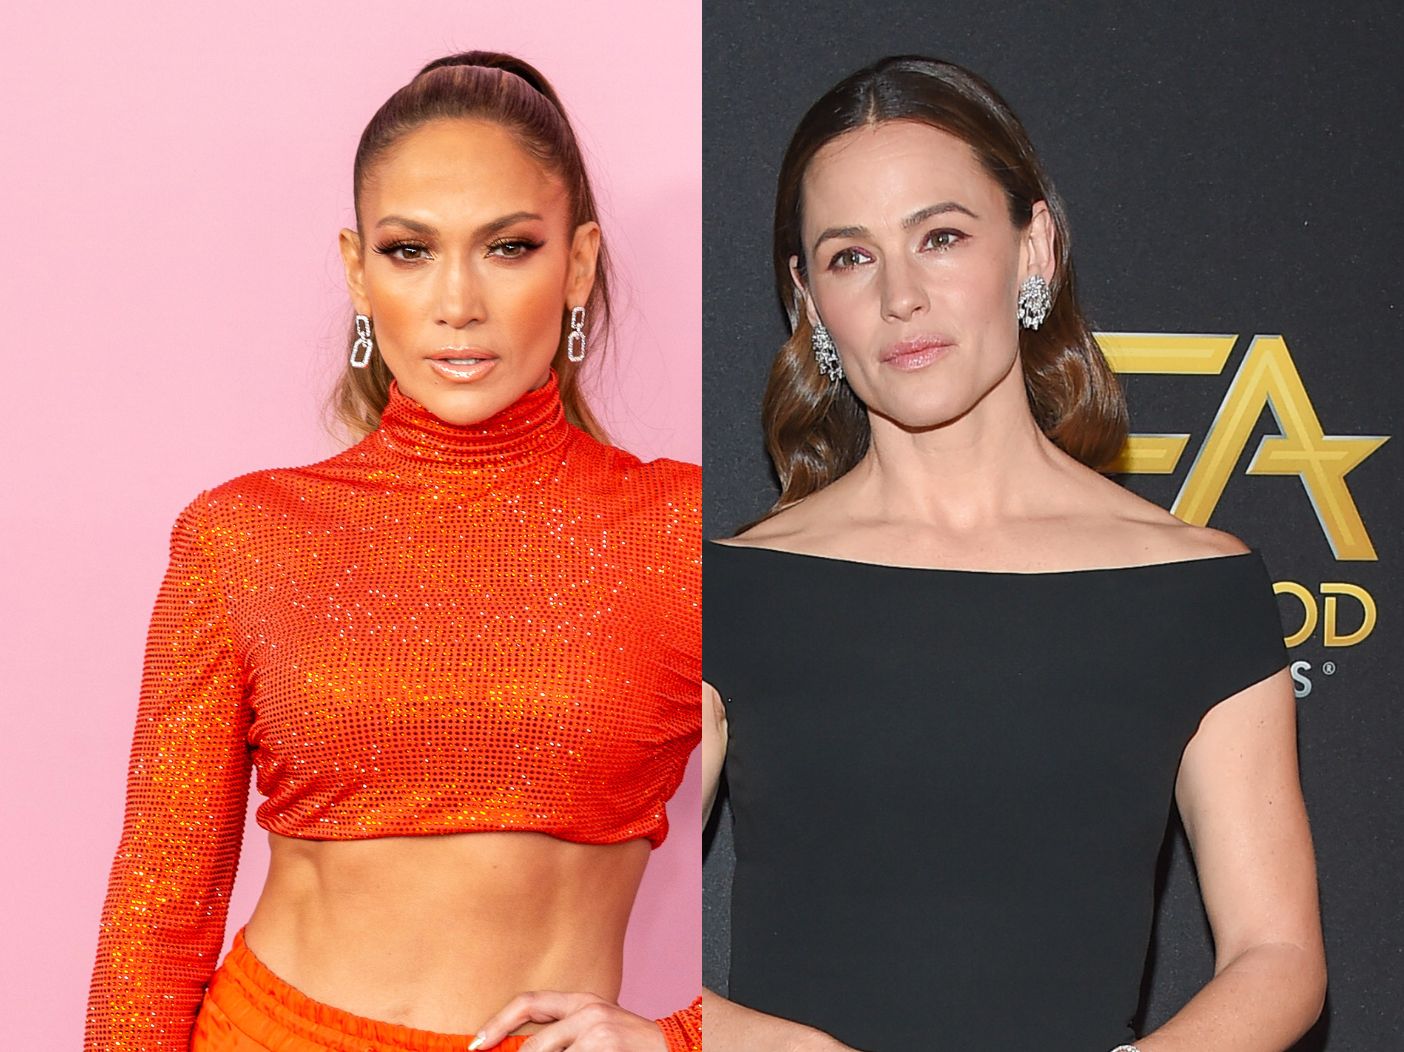 Shady Insider claims Jennifer Garner tried to warn Jennifer Lopez about Ben Affleck last year